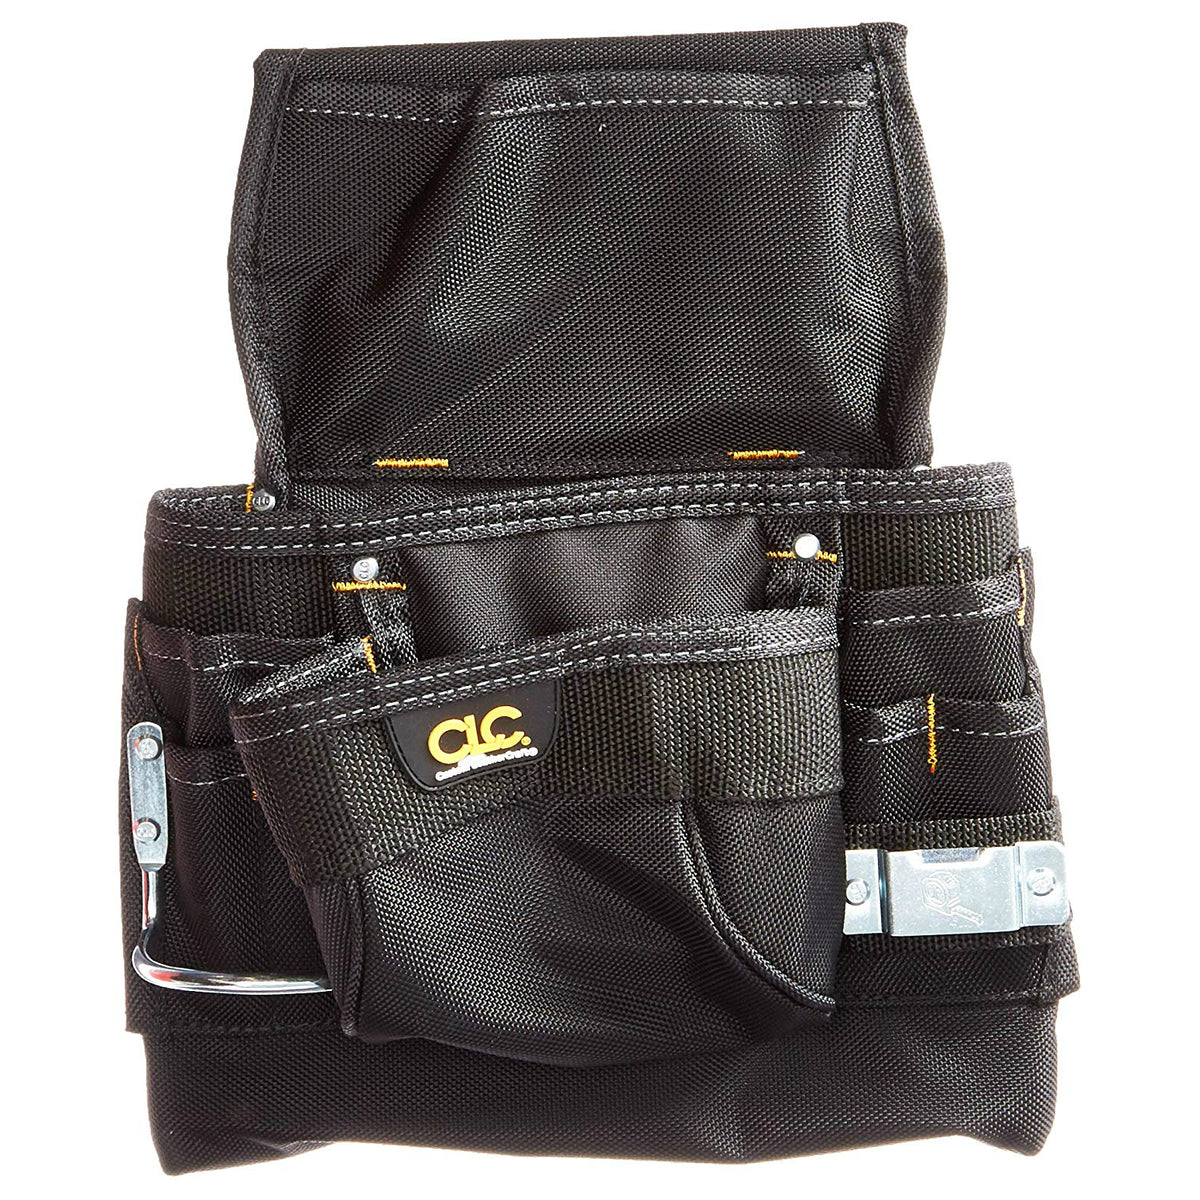 CLC 5833  Pro Framer Heavy-Duty Ballistic Fabric Nail & Tool Bag, 9 Pockets